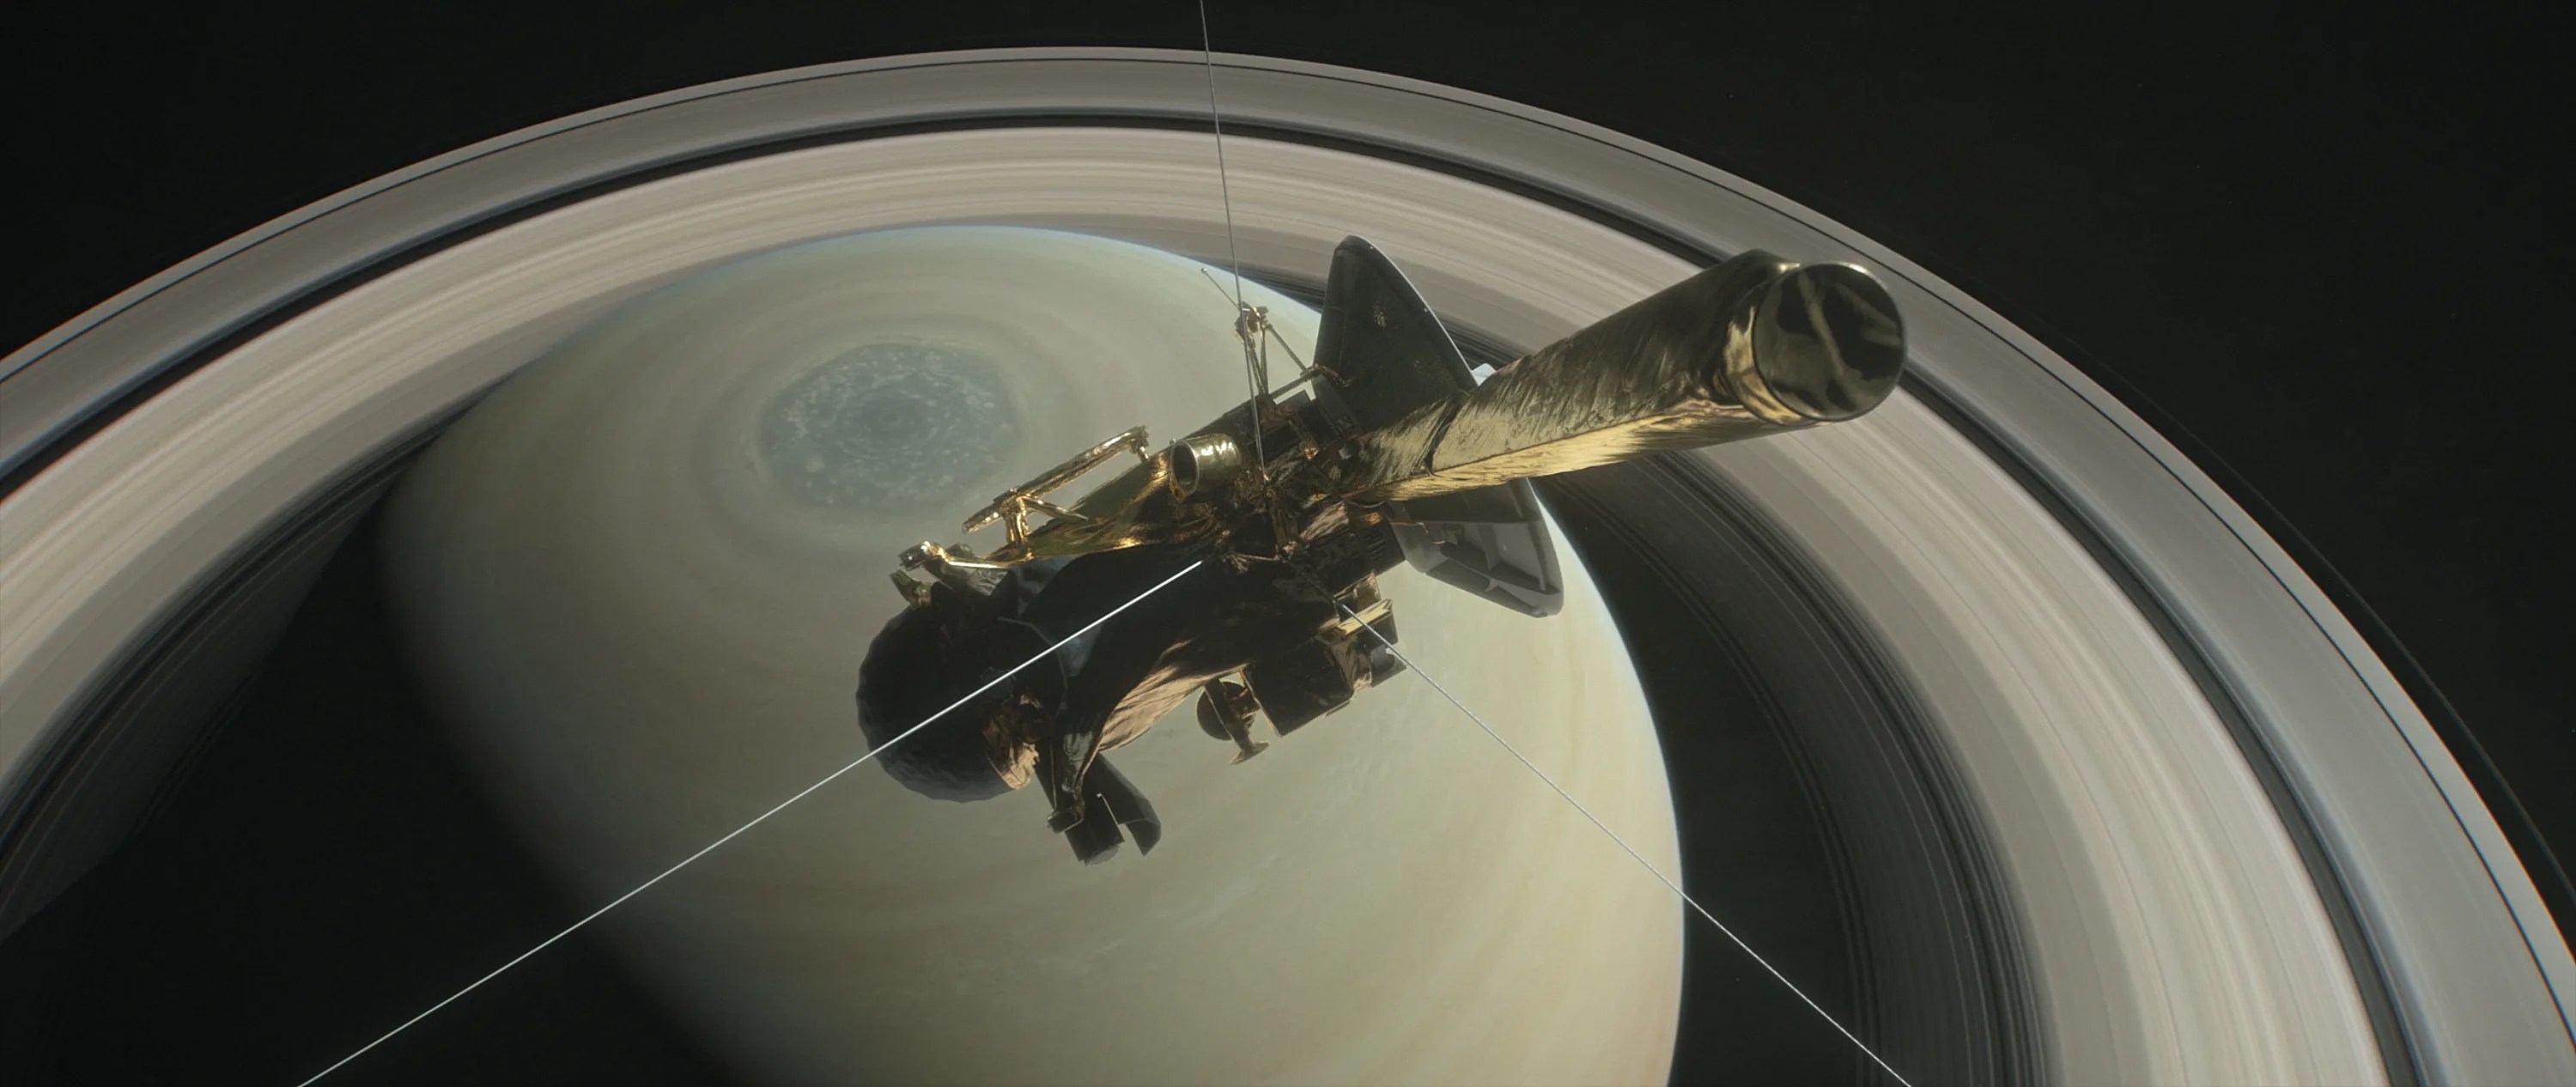 Illustrated Cassini above Saturn's rings.